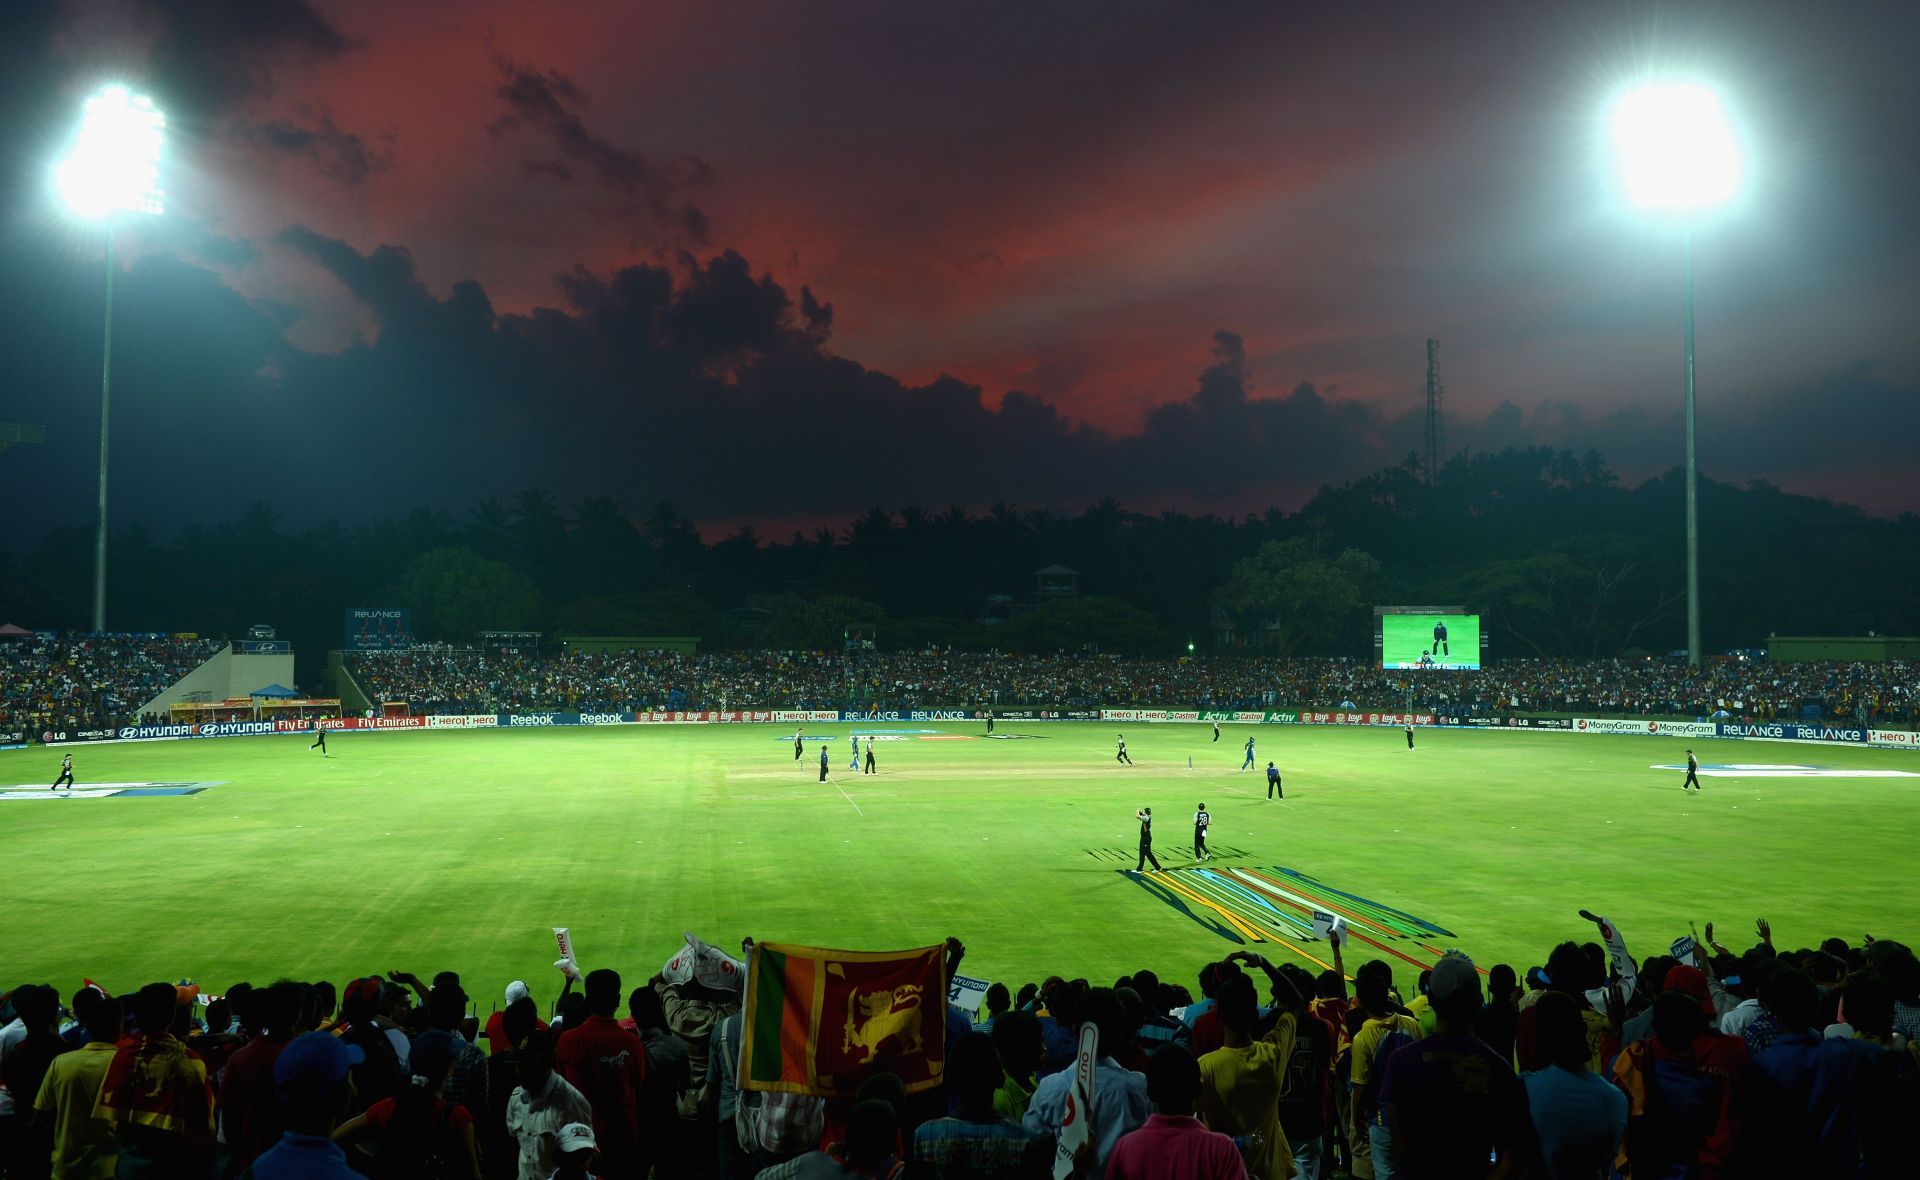 The second season of the Lanka Premier League begins on December 5